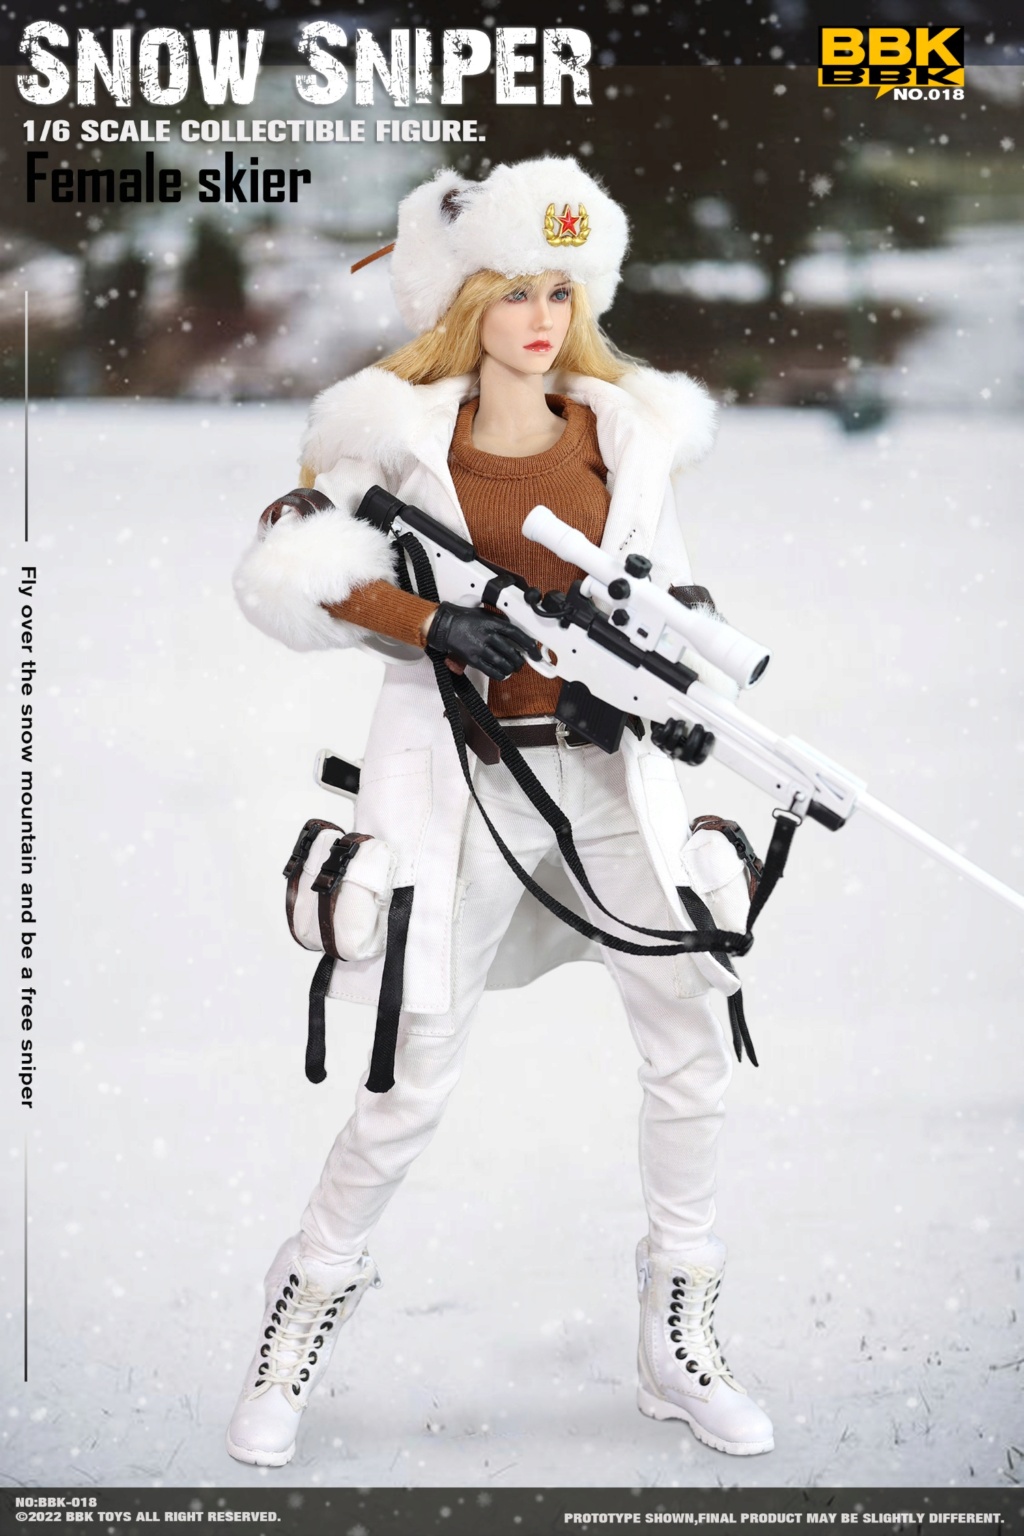 NEW PRODUCT: BBK: BBK018 1/6 Scale Snow Sniper (Female Skier) 4698bf10